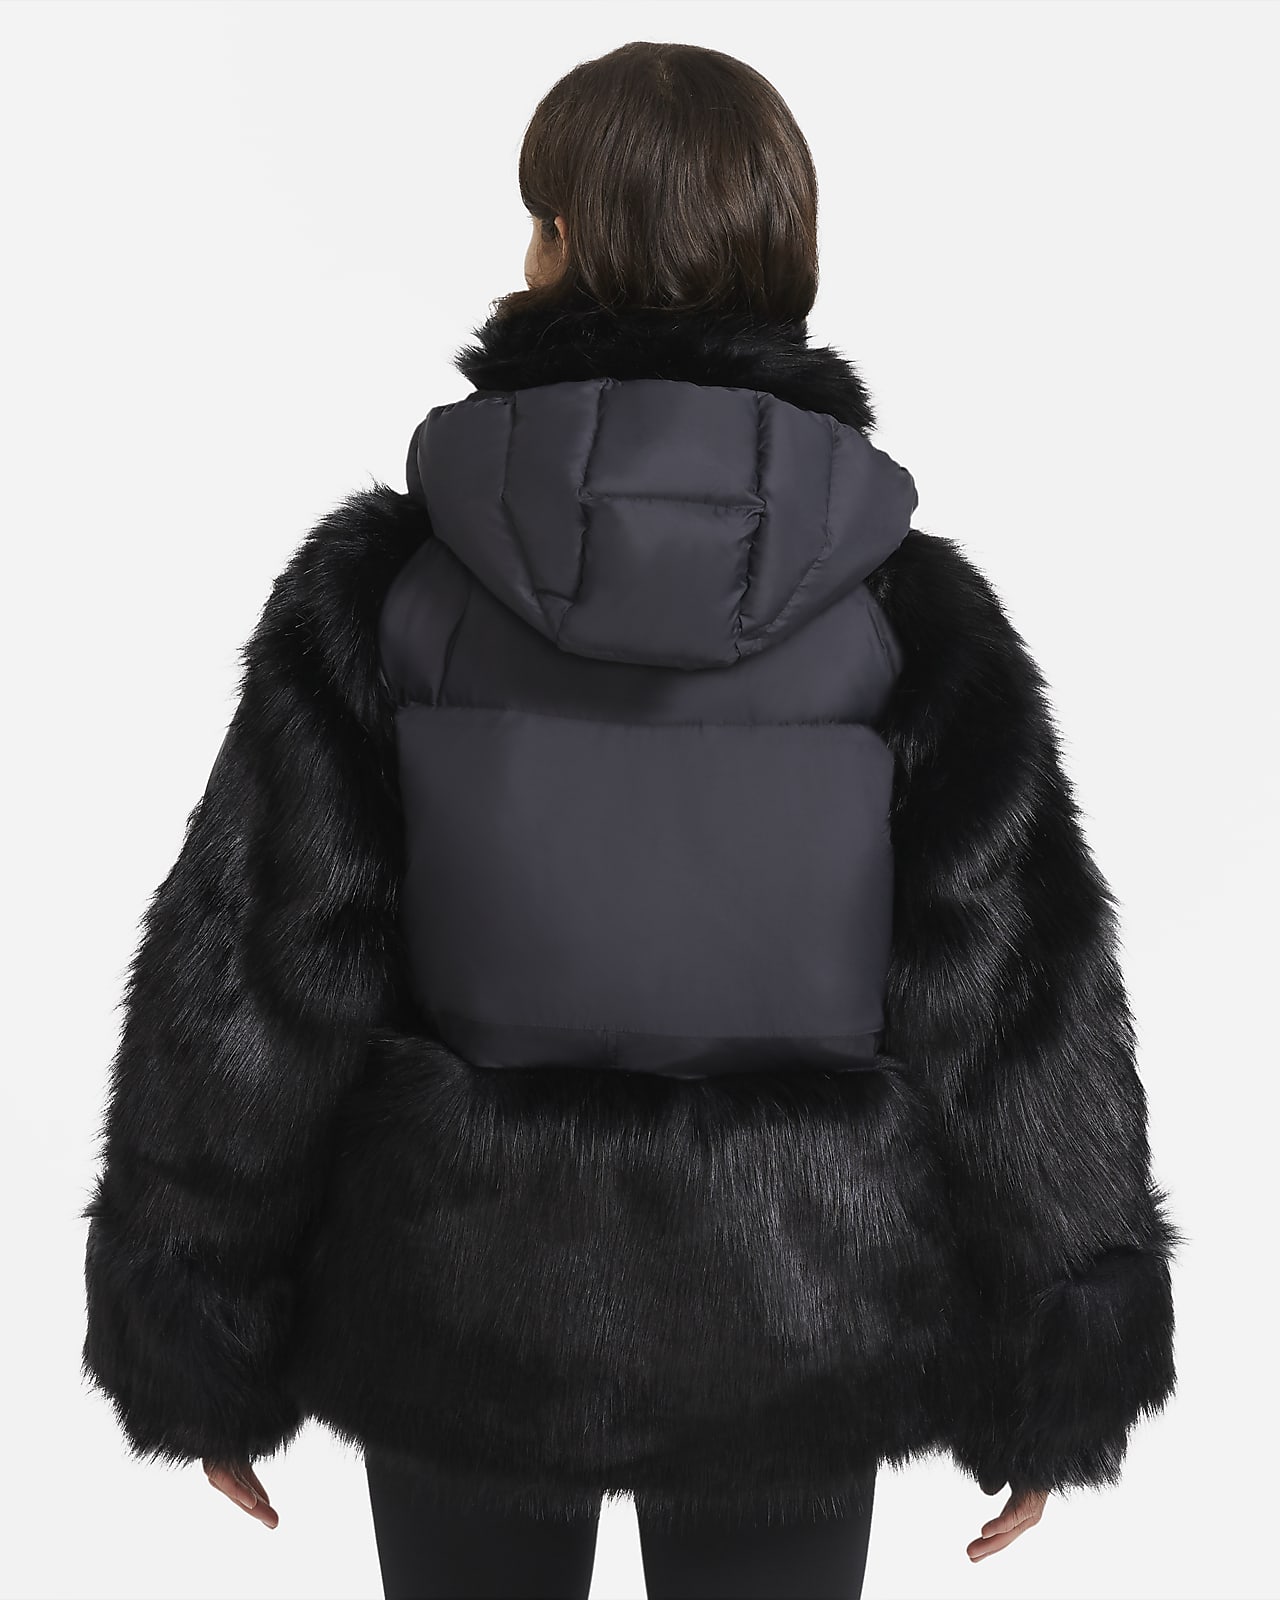 nike coat with fur